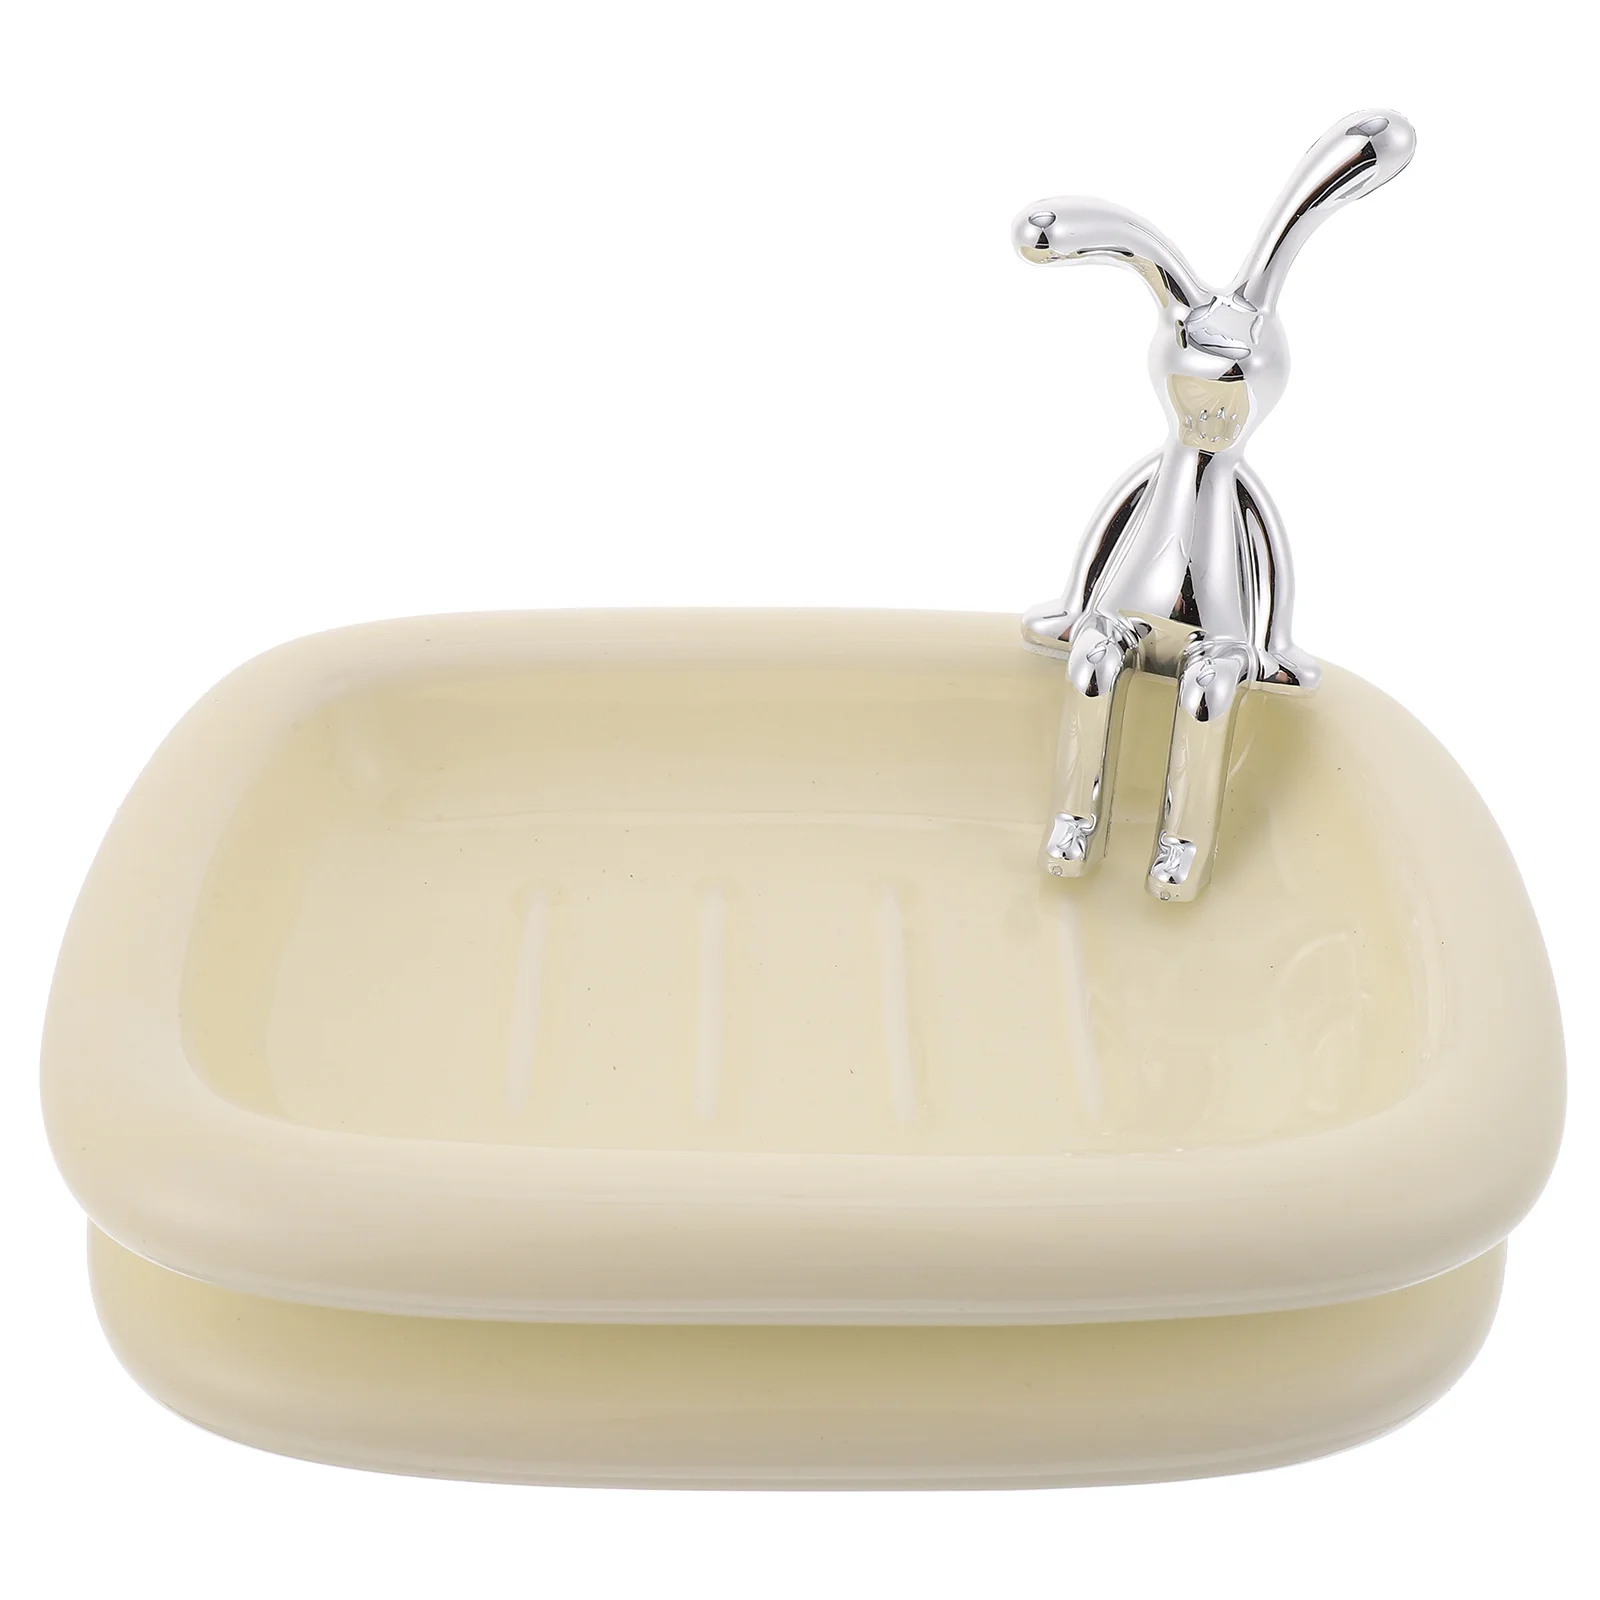 

Ceramic Soap Dish Small Bar For Shower Dishes Bathroom Container Bathtub Decor Holder